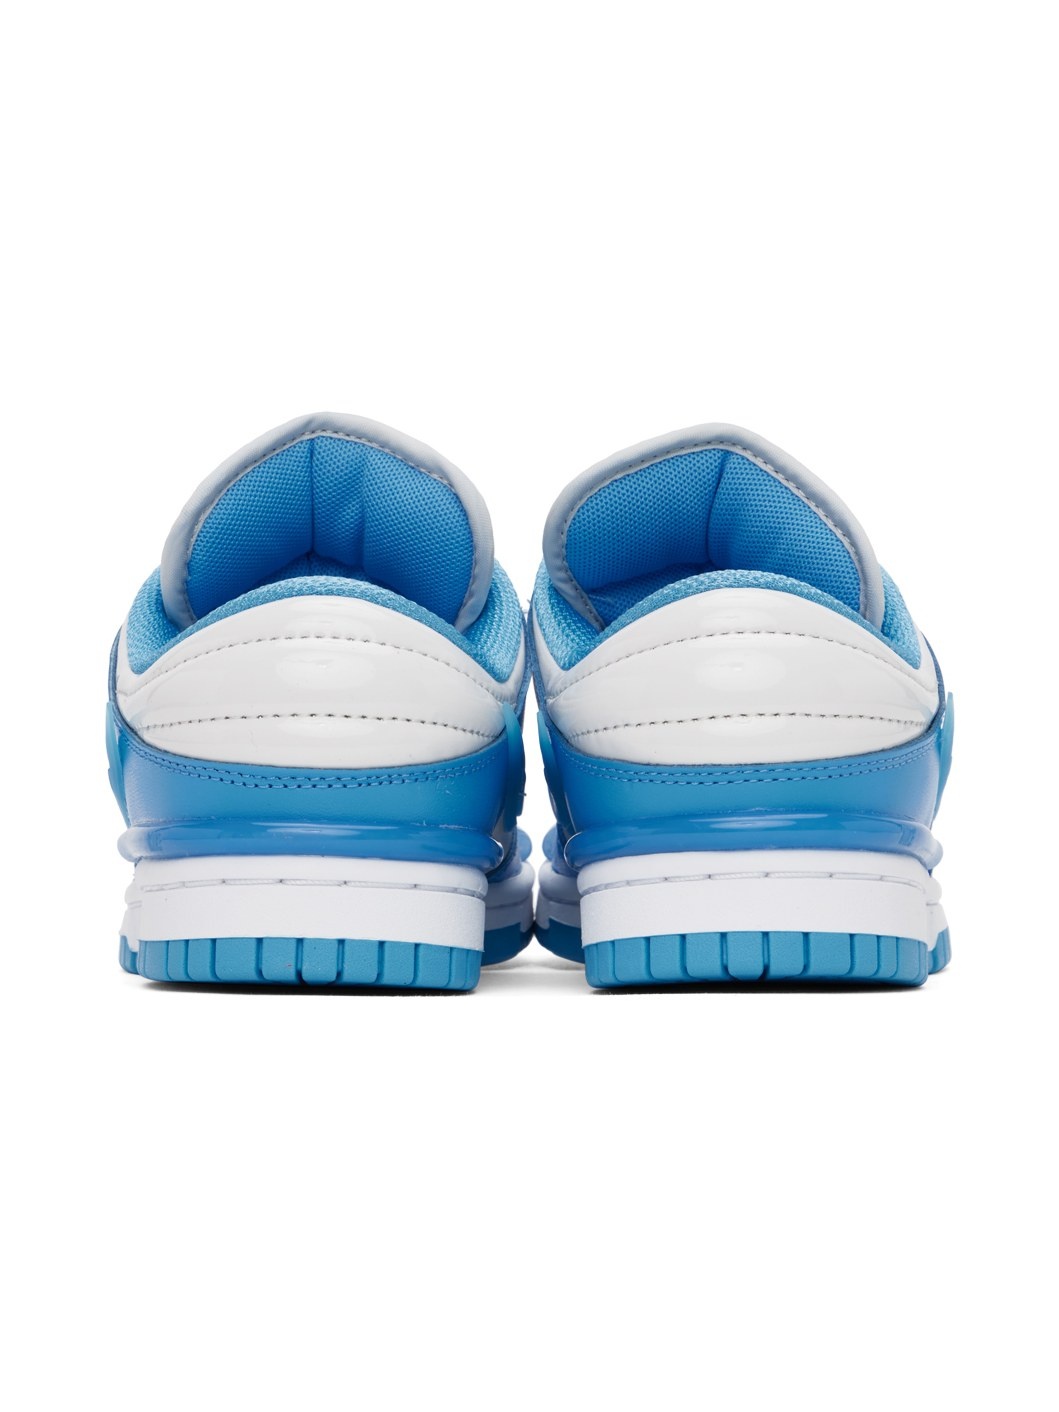 White & Blue Dunk Low Twist Sneakers - 2